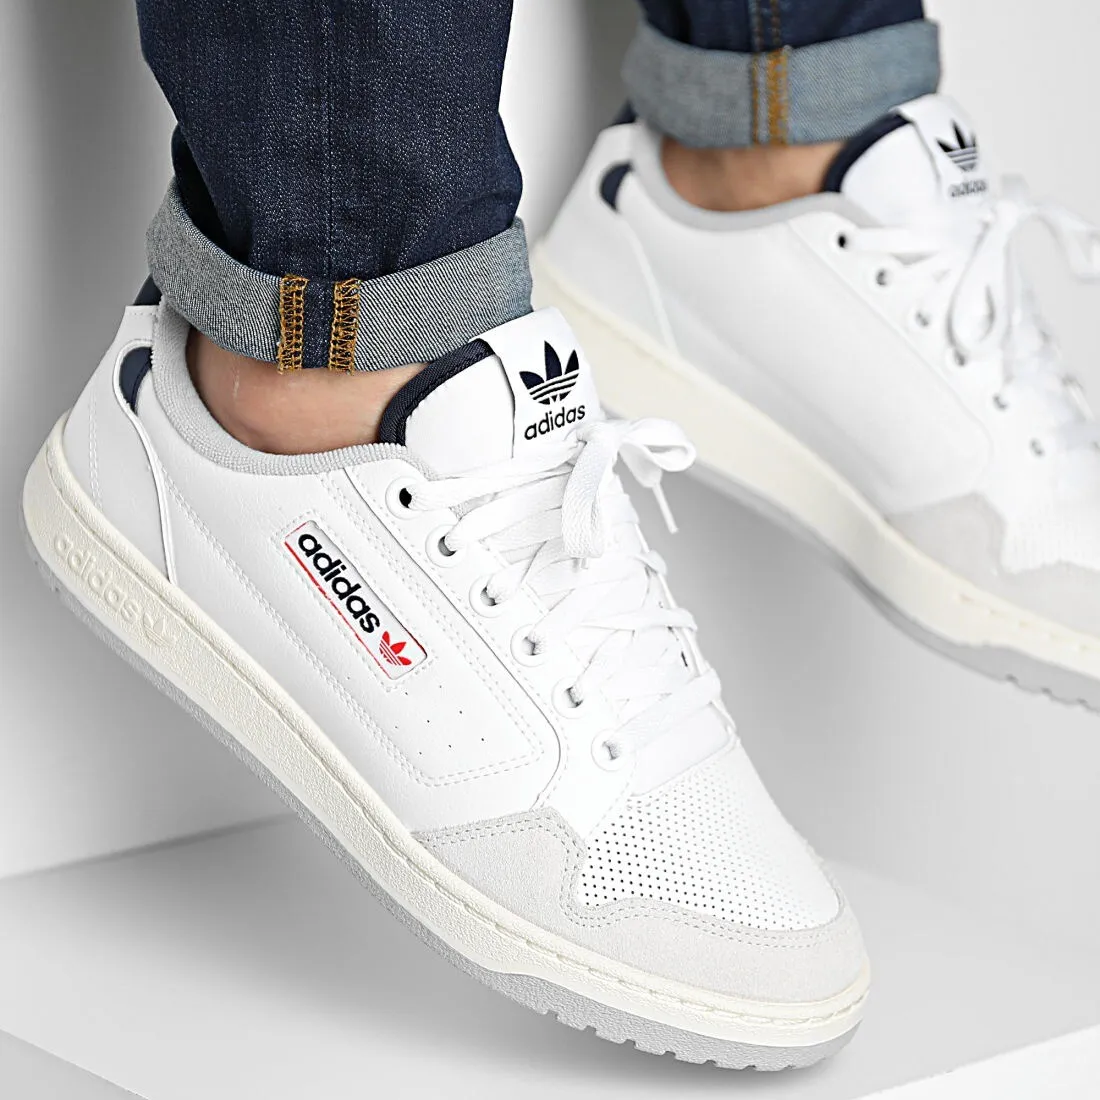 Adidas NY 90 Footwear new Ink 8-12 eBay sneaker White Shoes Legend | Sz Mens